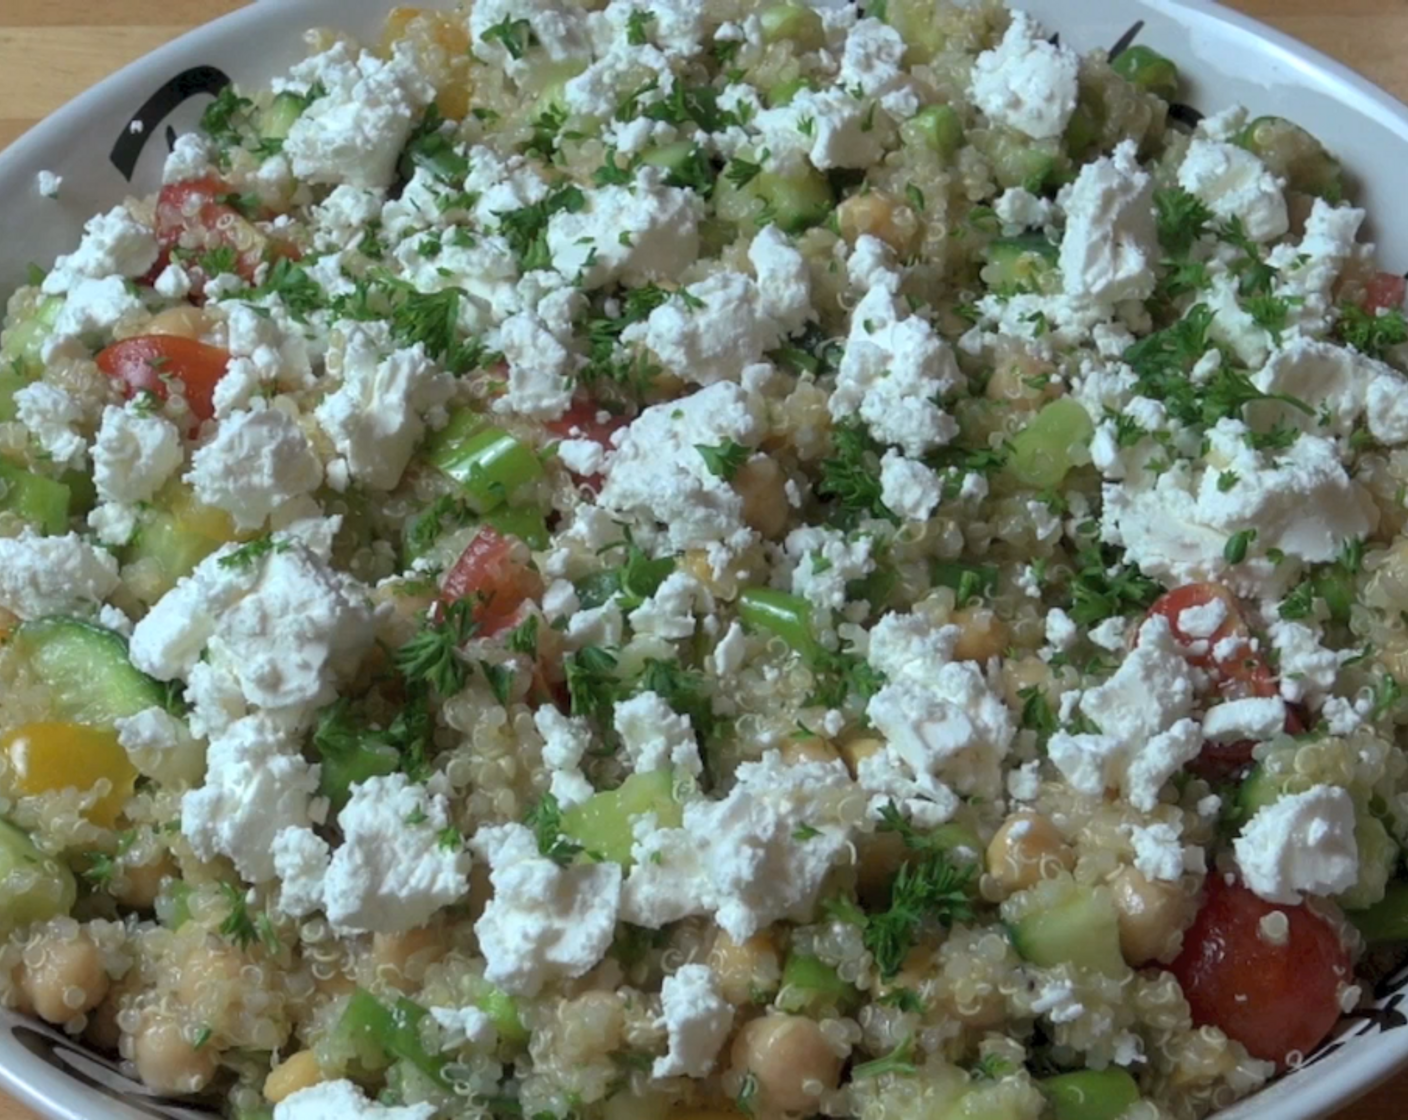 Easy Quinoa Salad